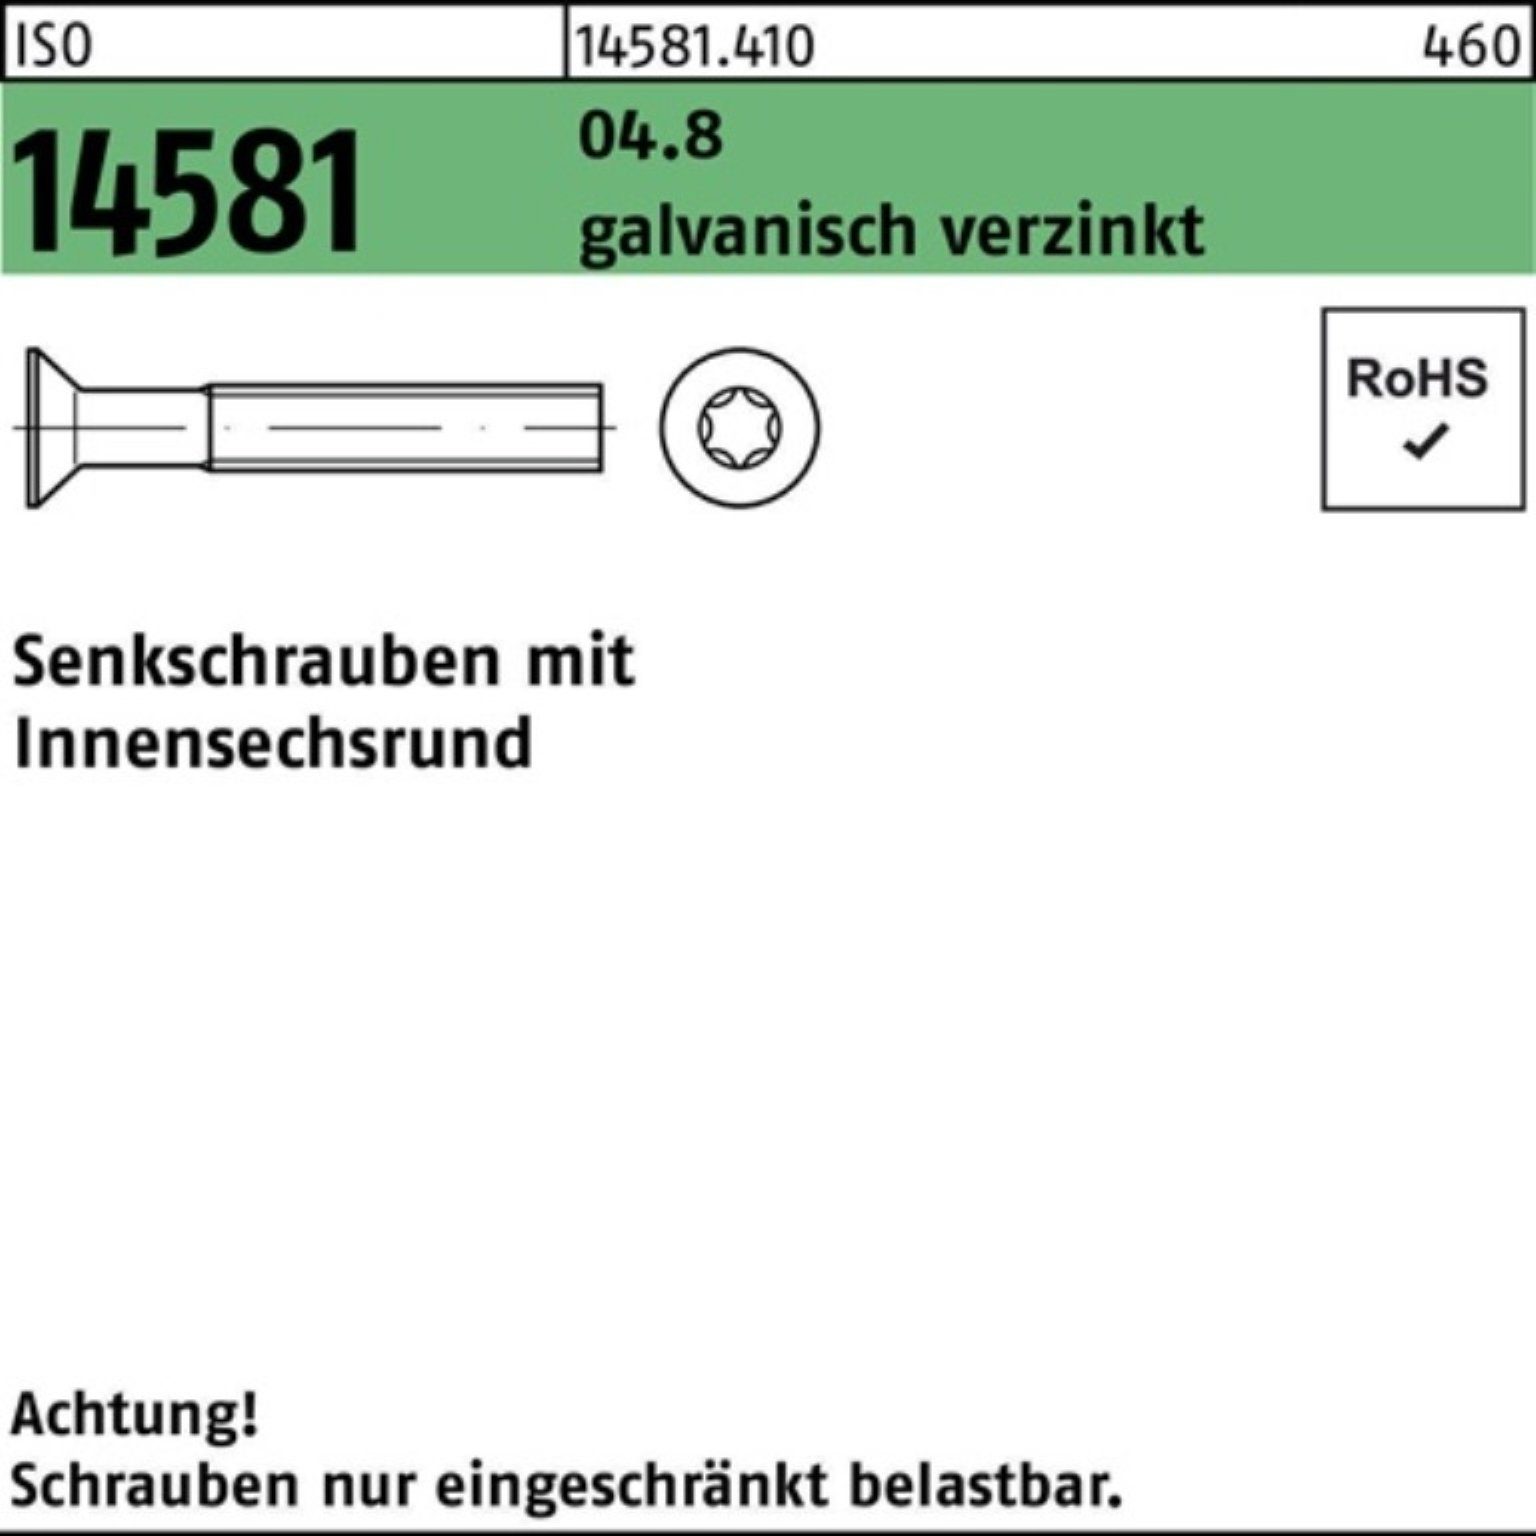 Reyher Senkschraube 1000er Pack Senkschraube ISO 14581 ISR M5x20 T25 04.8 galv.verz. 1000S